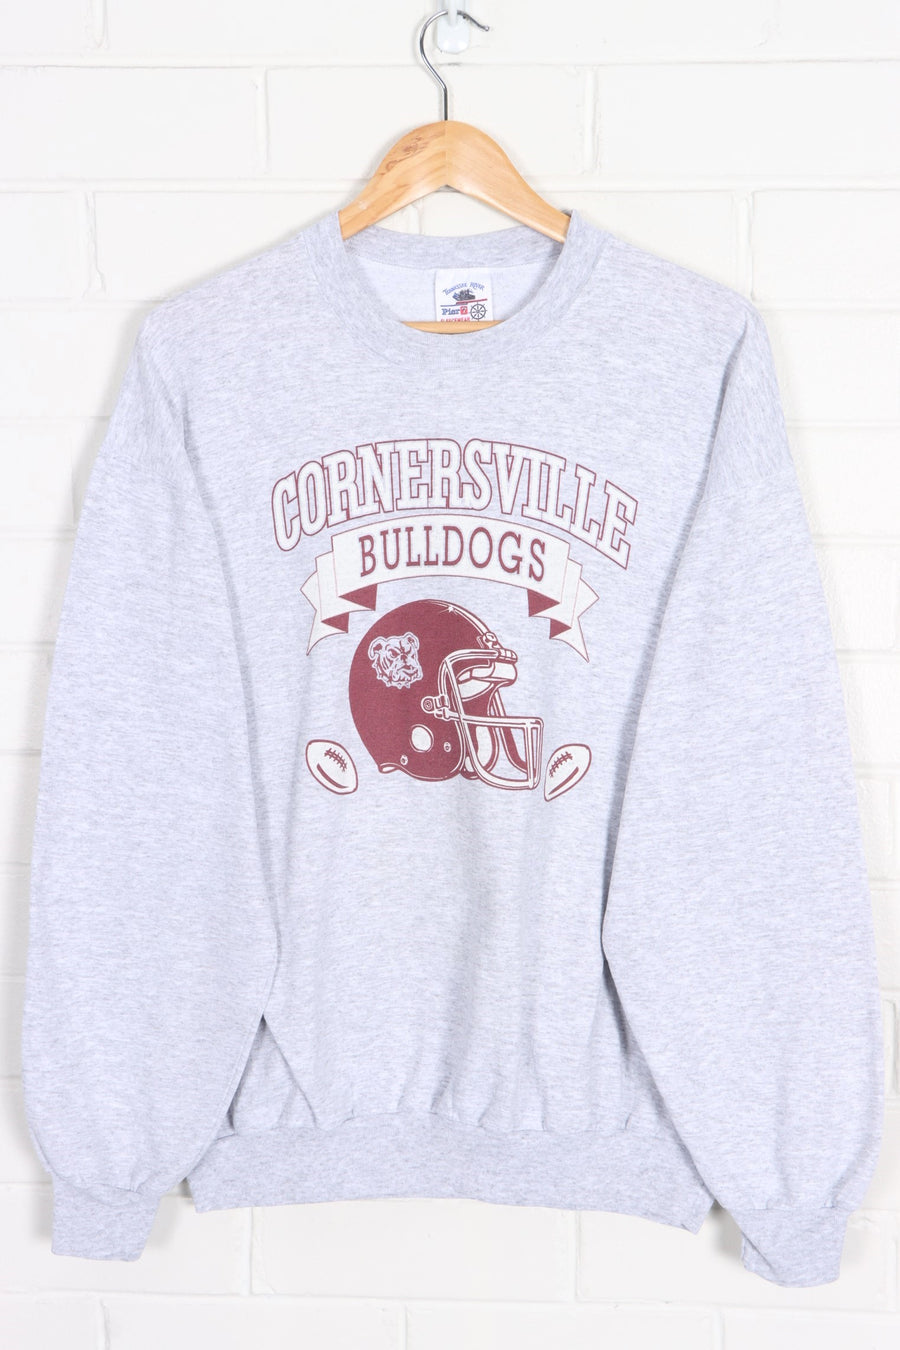 Cornersville Bulldogs Football Lightweight Sweatshirt USA Made (XL)